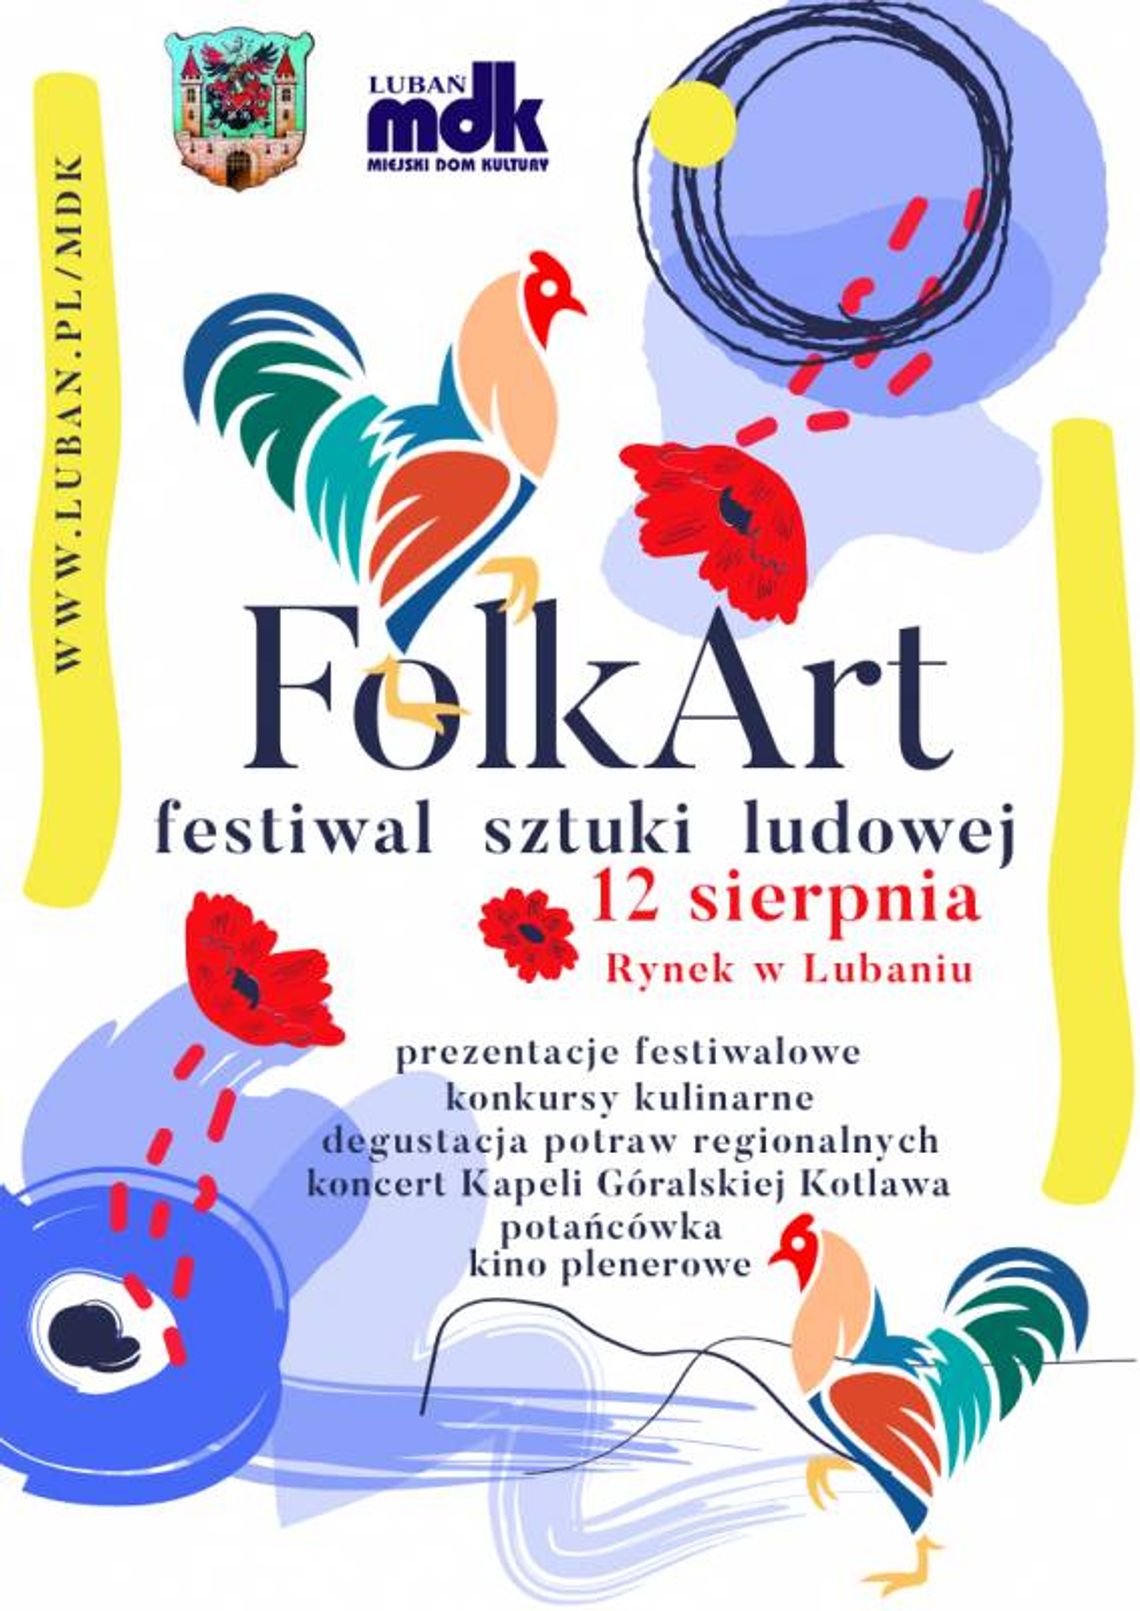 FolkArt'23, czyli festiwal sztuki ludowej już 12 sierpnia